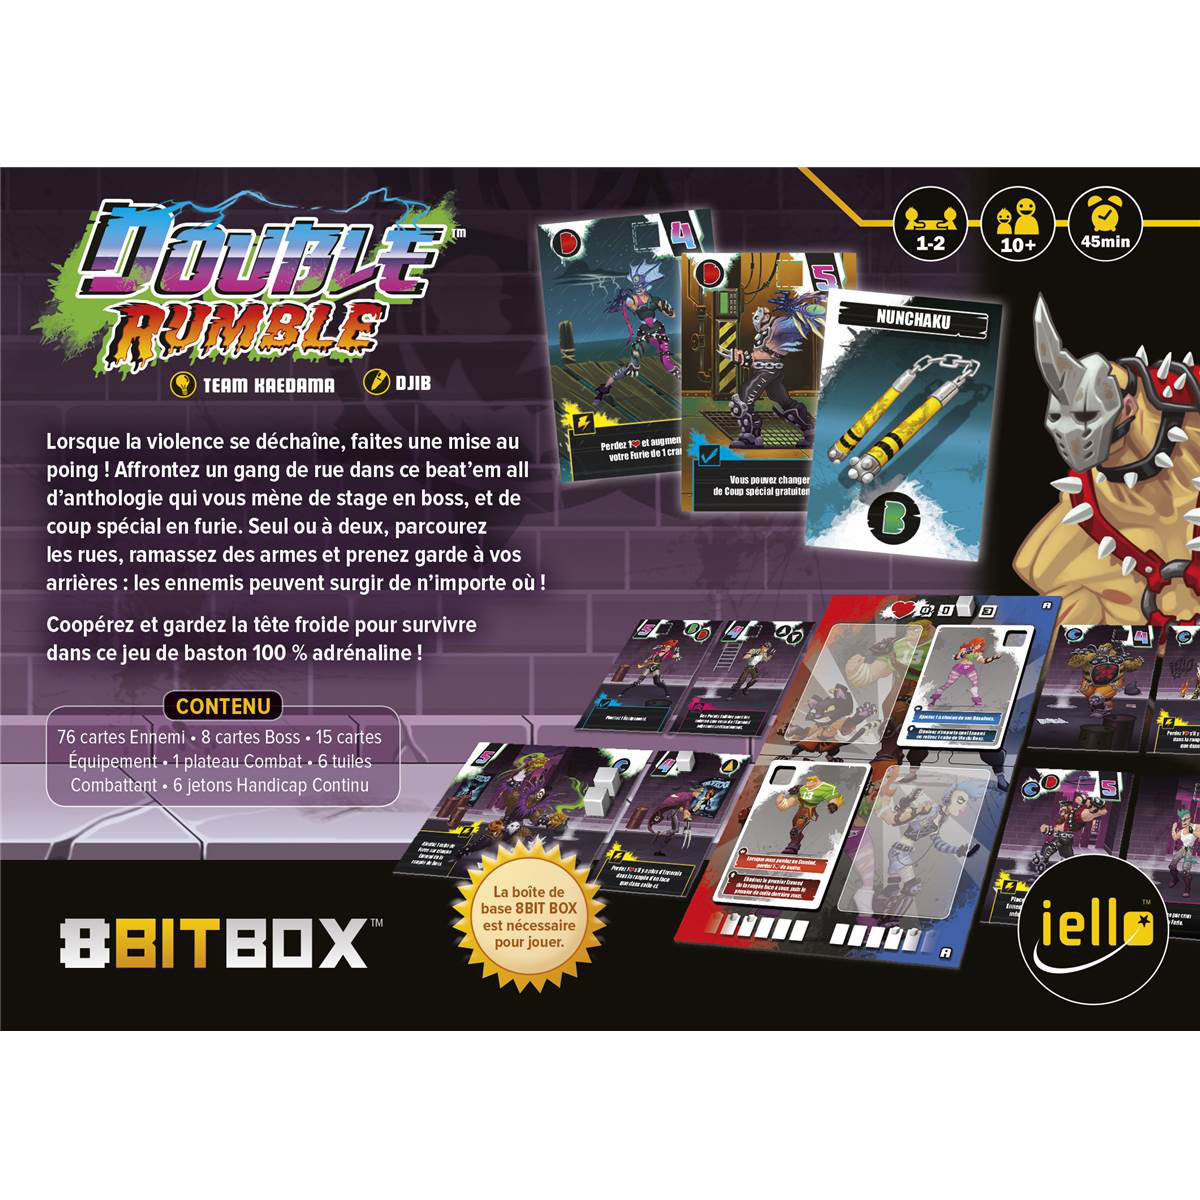 8 Bit Box - Double Rumble dos boite